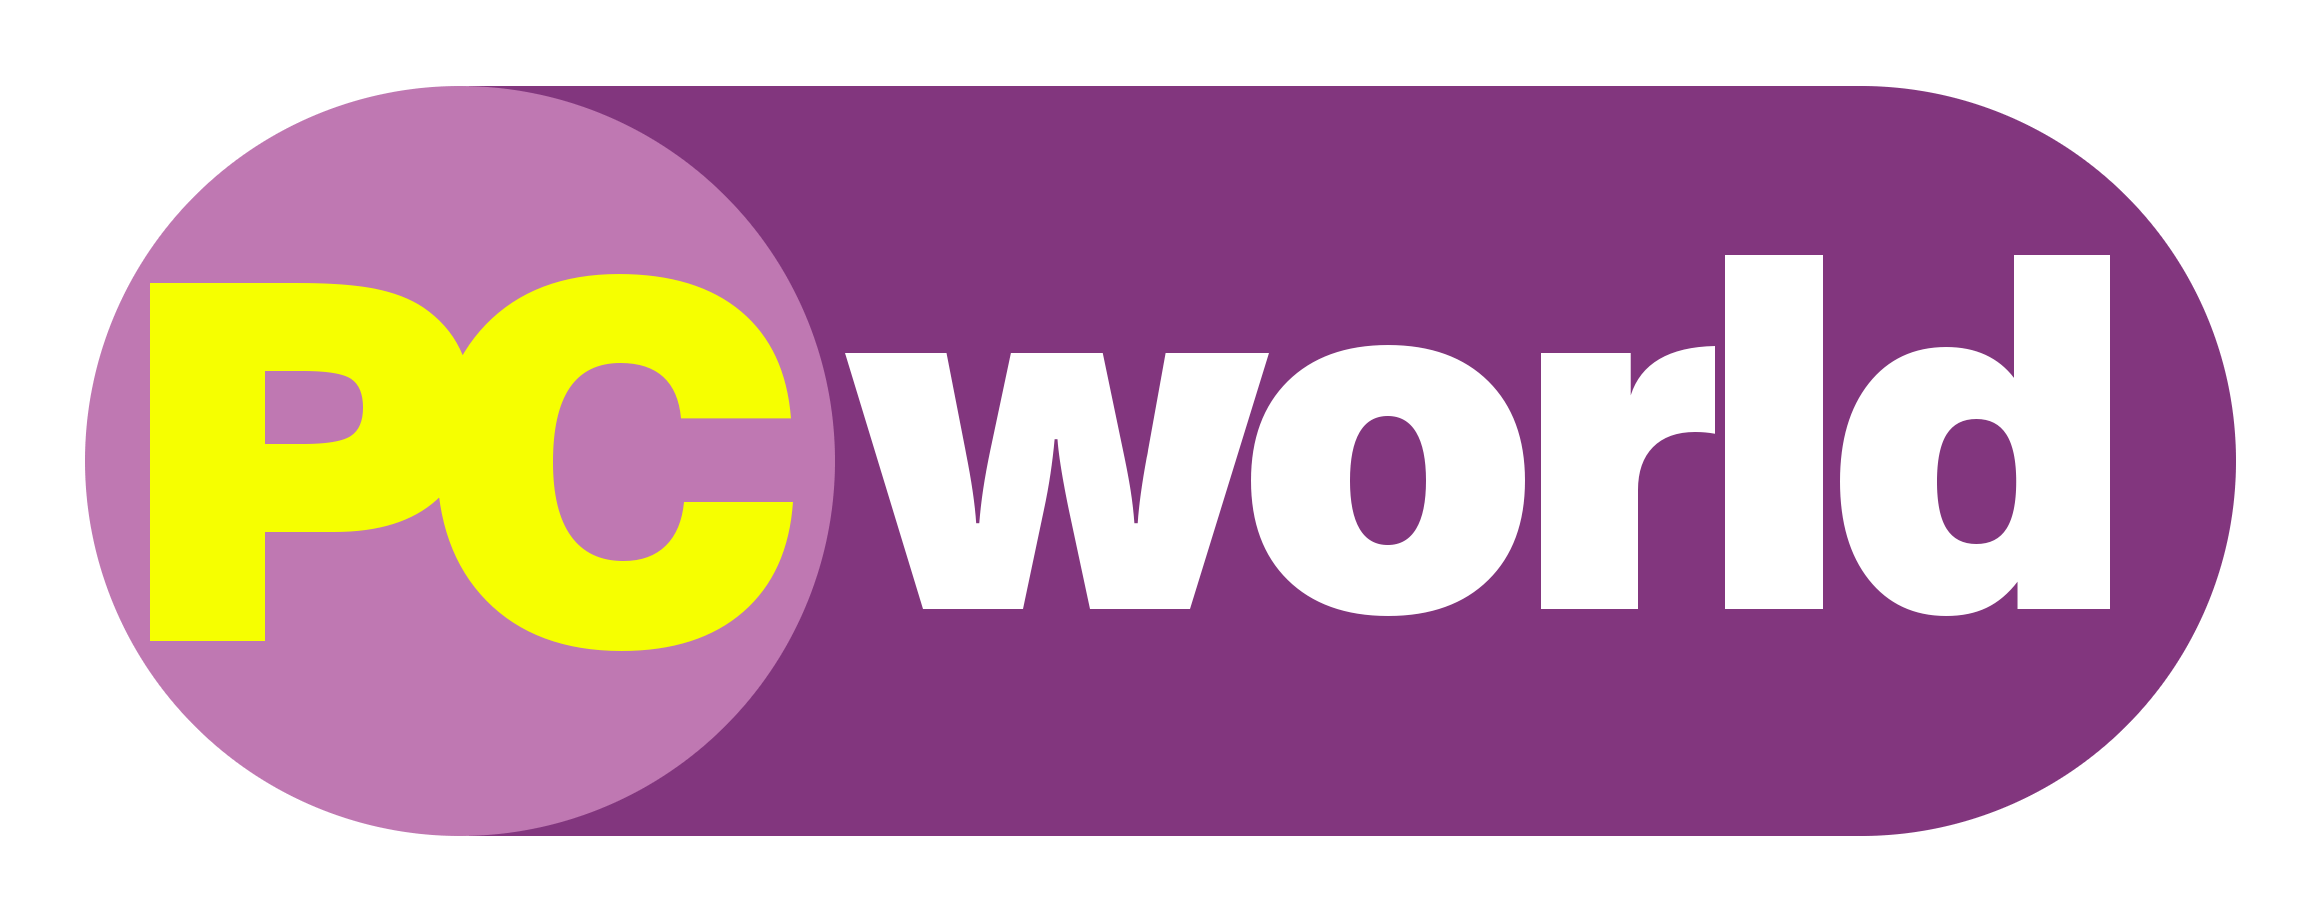 PC World Logo - PC World | Logopedia | FANDOM powered by Wikia